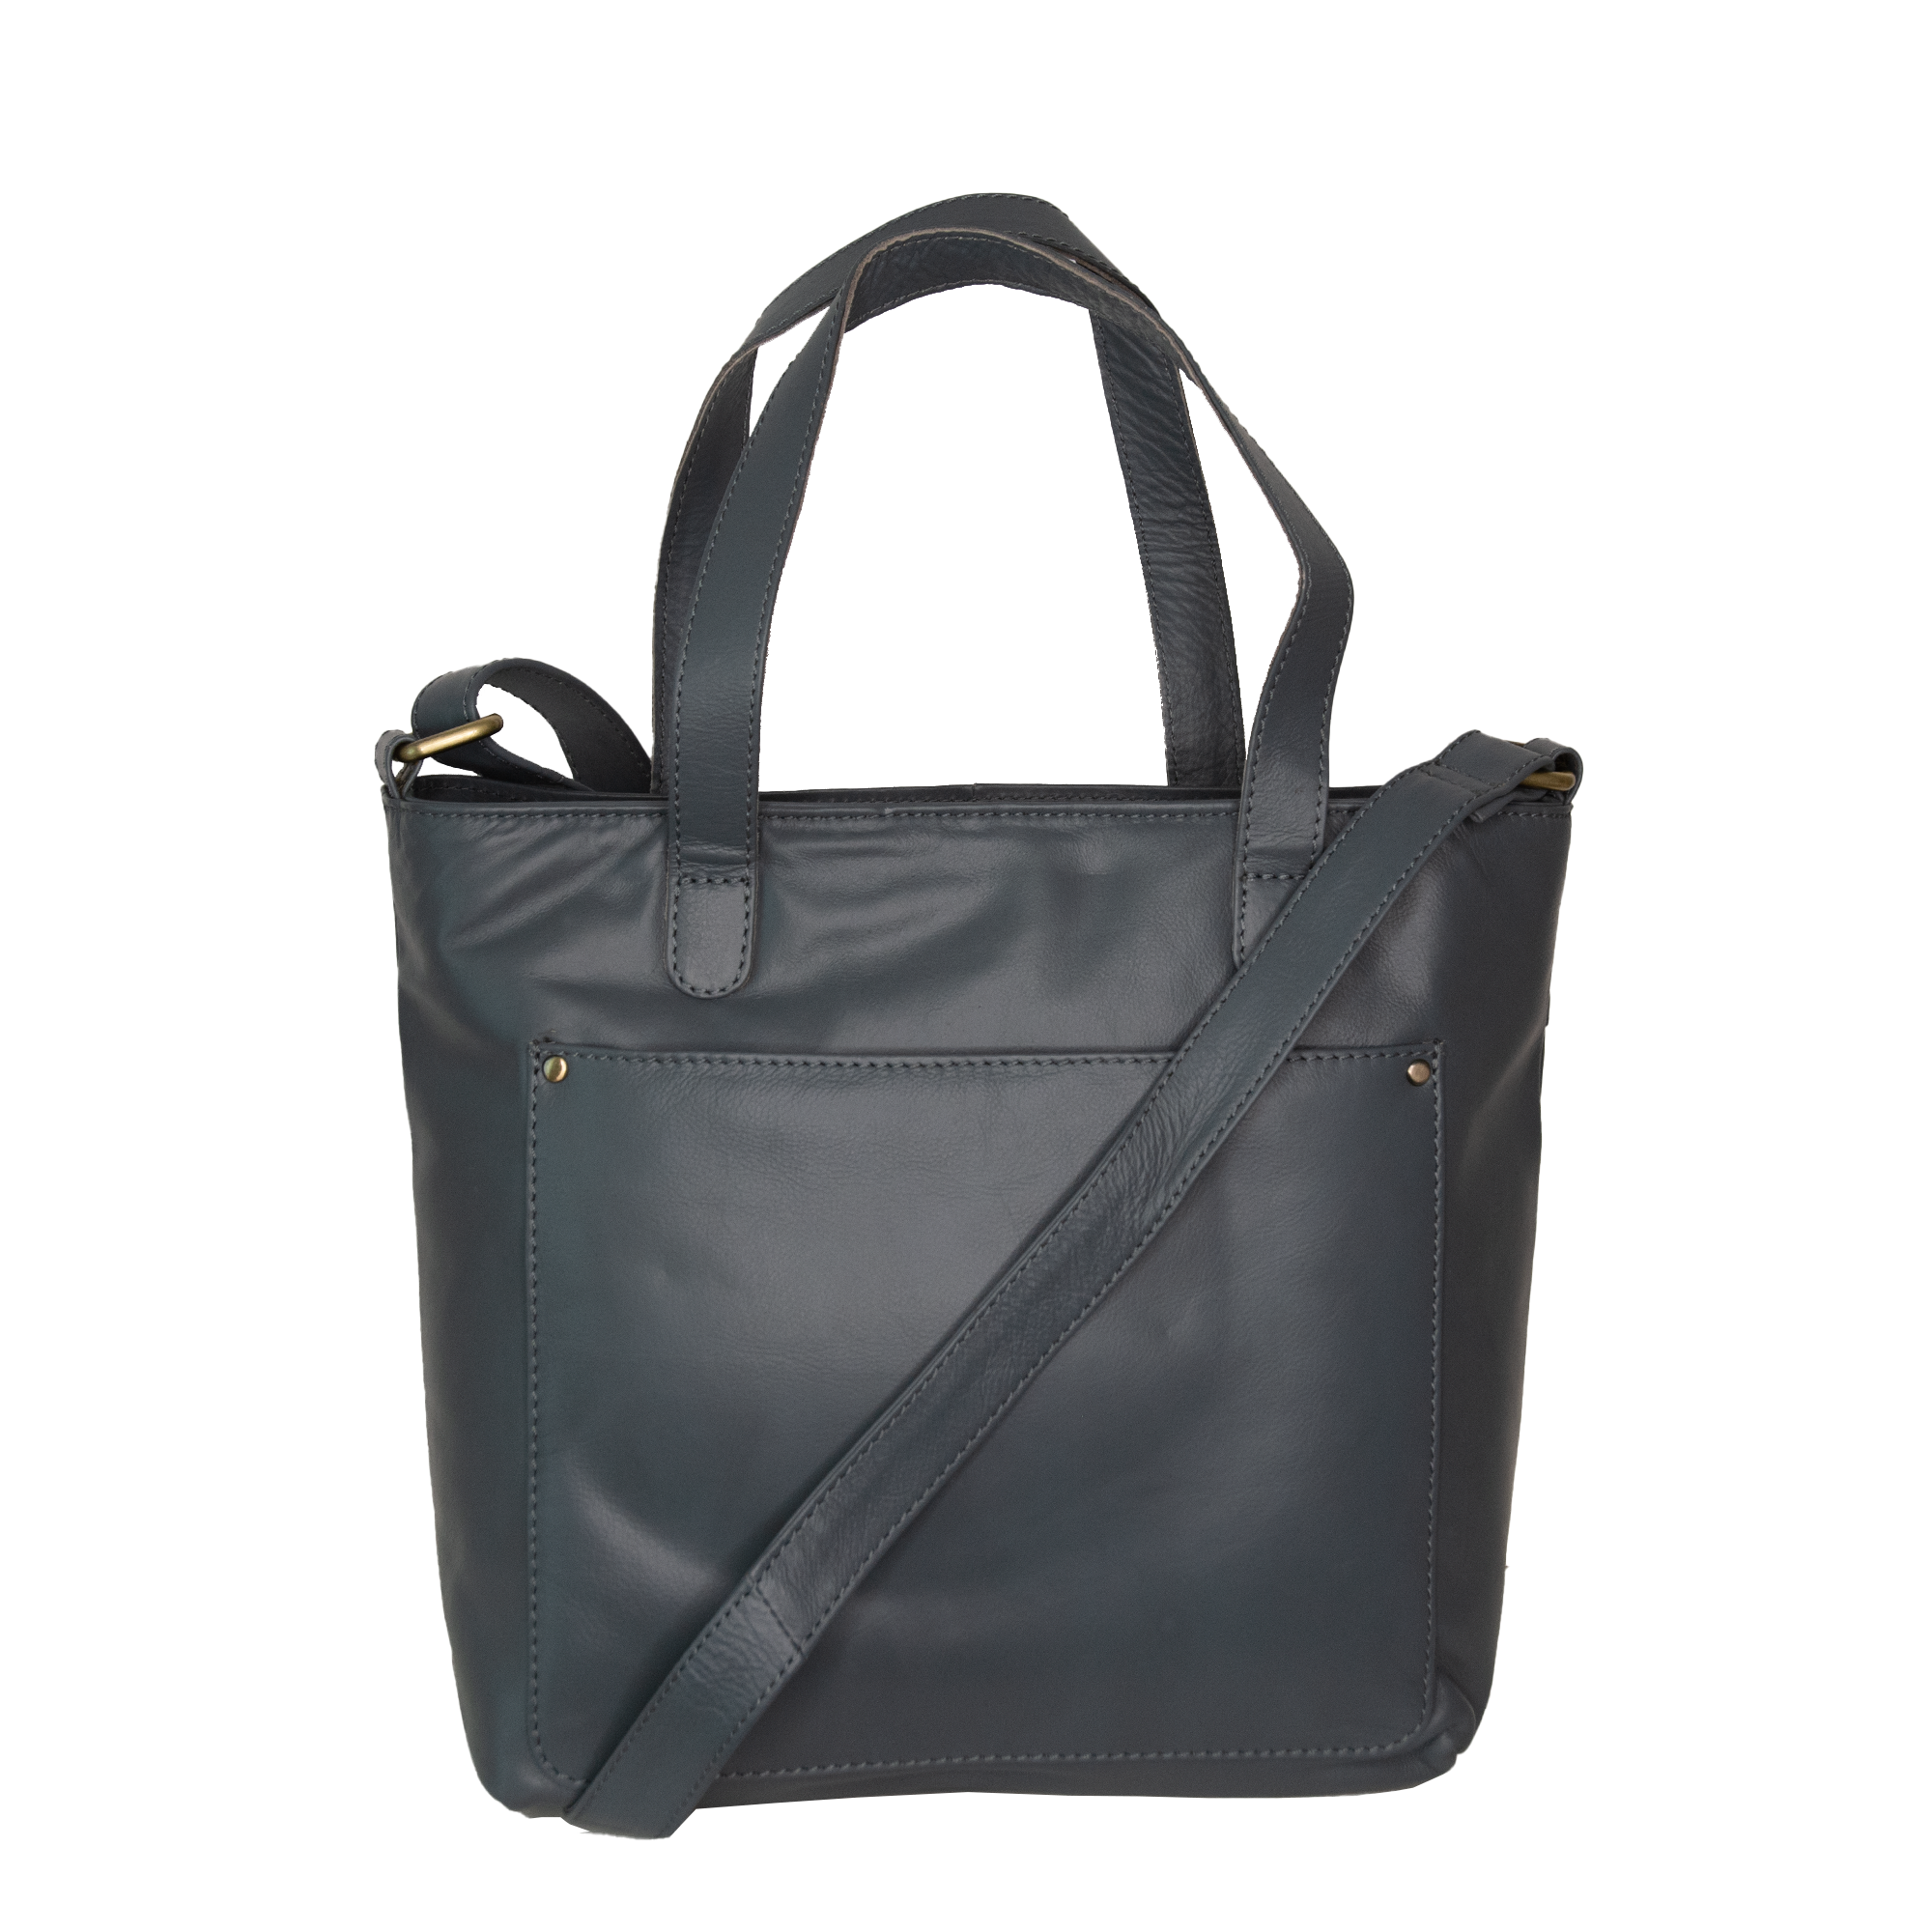 Jessica - (Vellutio Napa) Cross Body/Shoulder/Grab Bag (100% Genuine Leather)